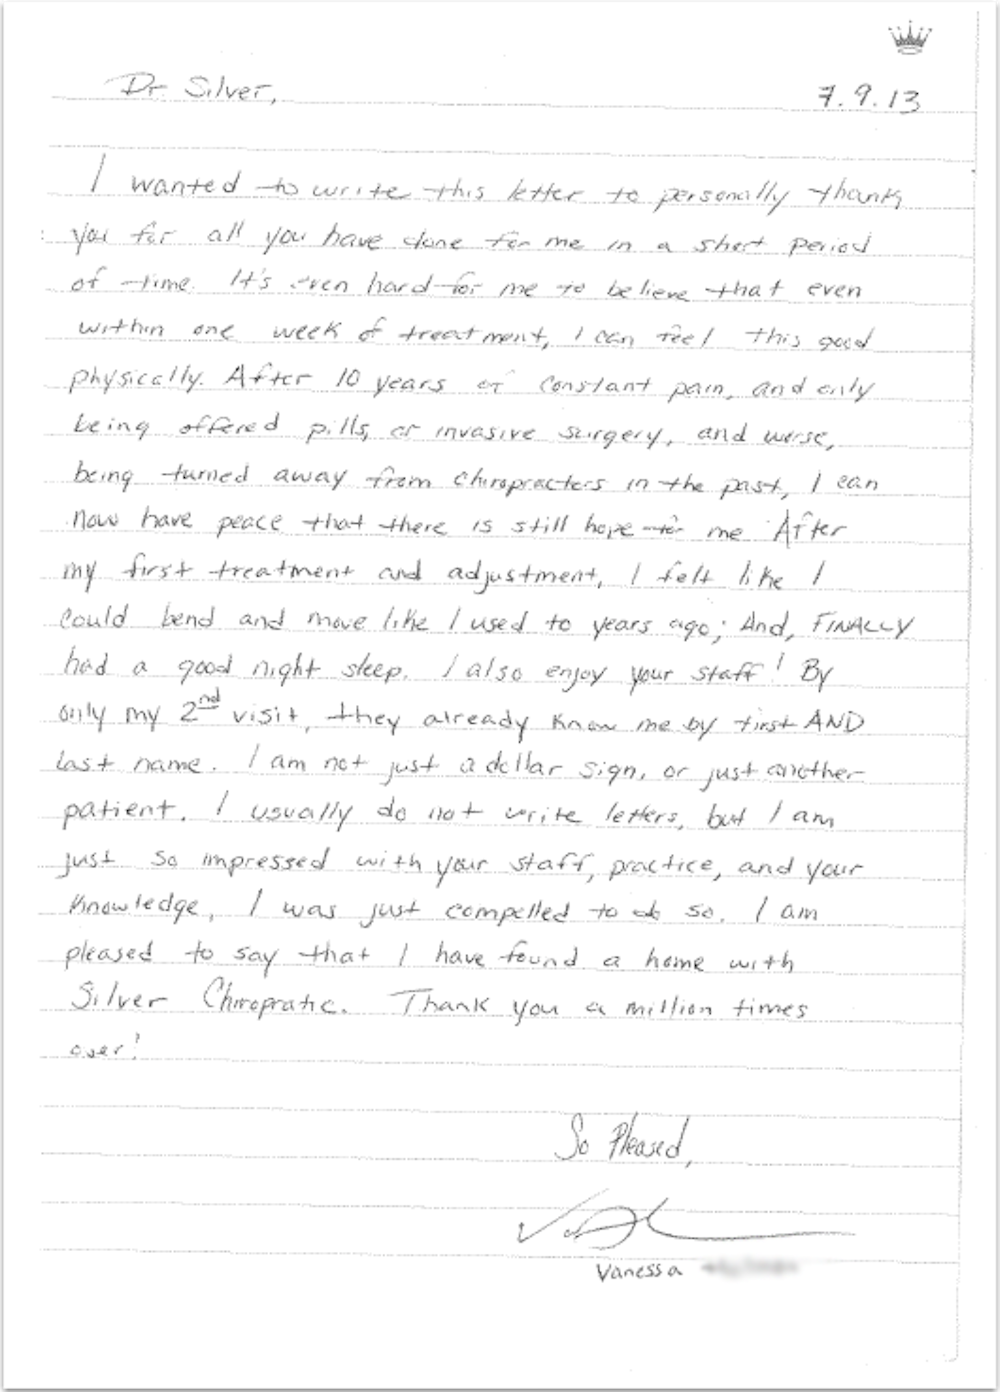 handwritten letter from happy patient of Silver Chiropractic & Wellness